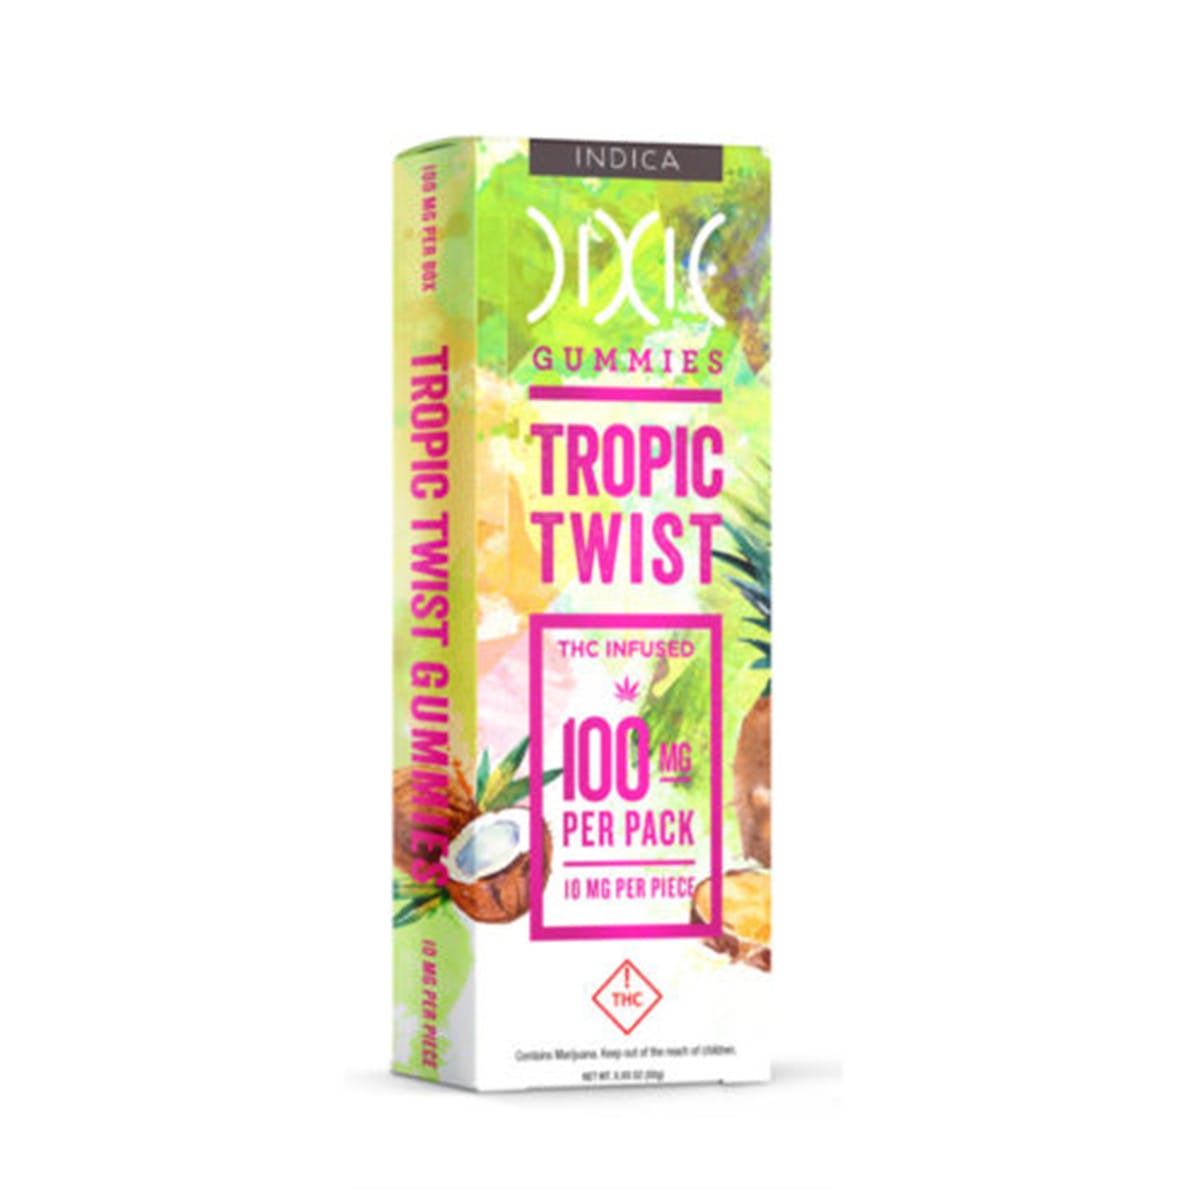 marijuana-dispensaries-tweedleaf-wild-west-in-trinidad-indica-tropic-twist-gummies-100mg